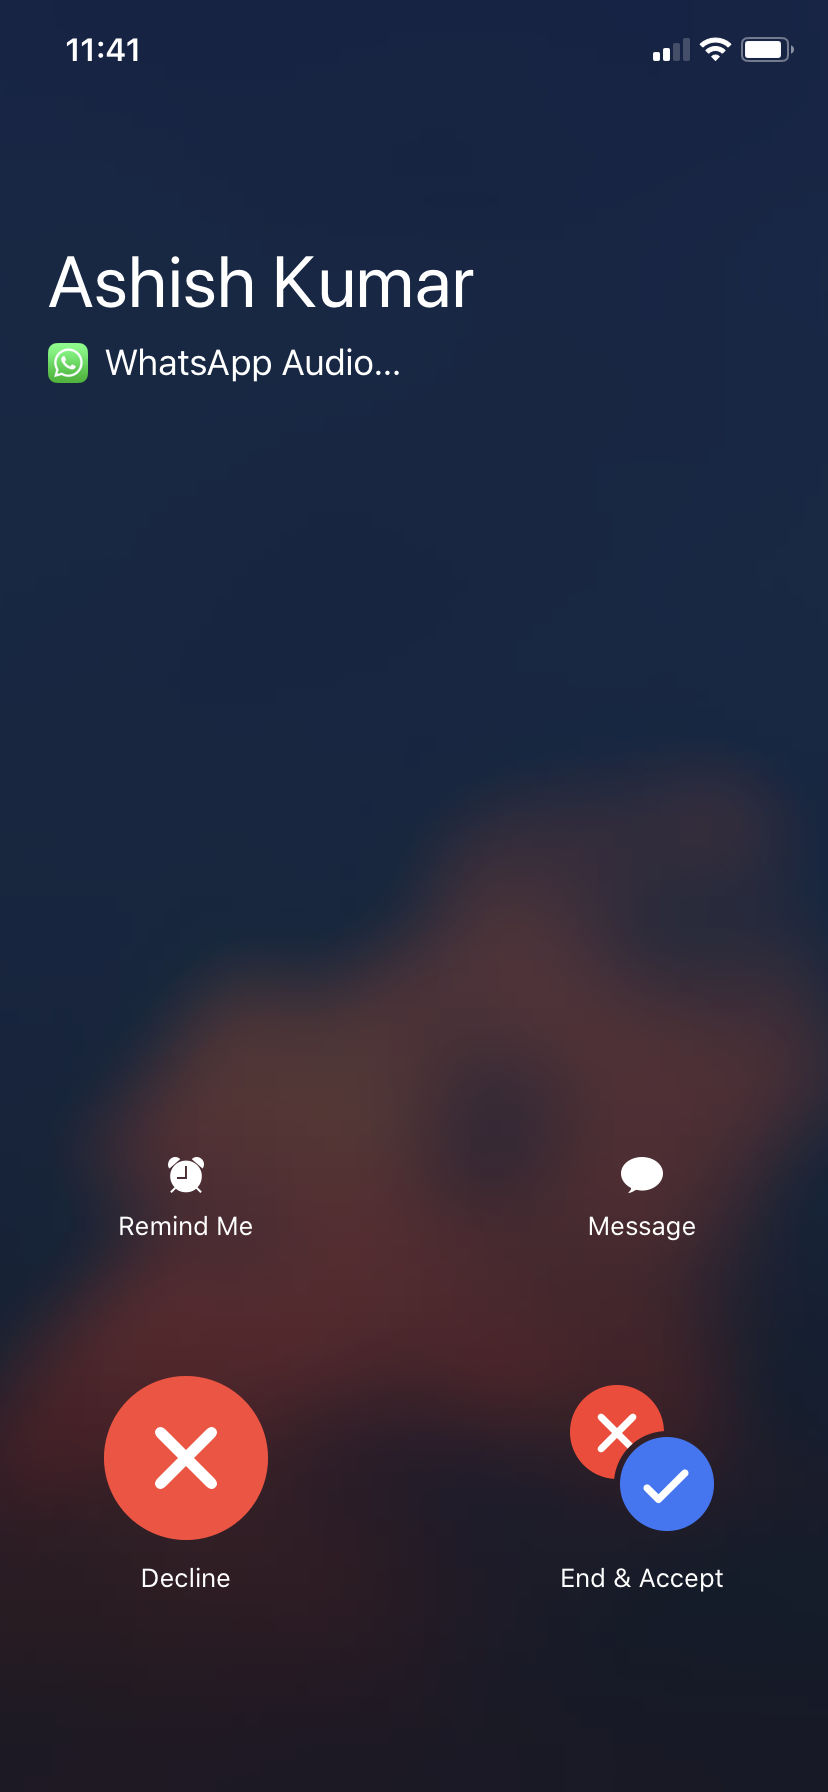 no recent calls on iphone